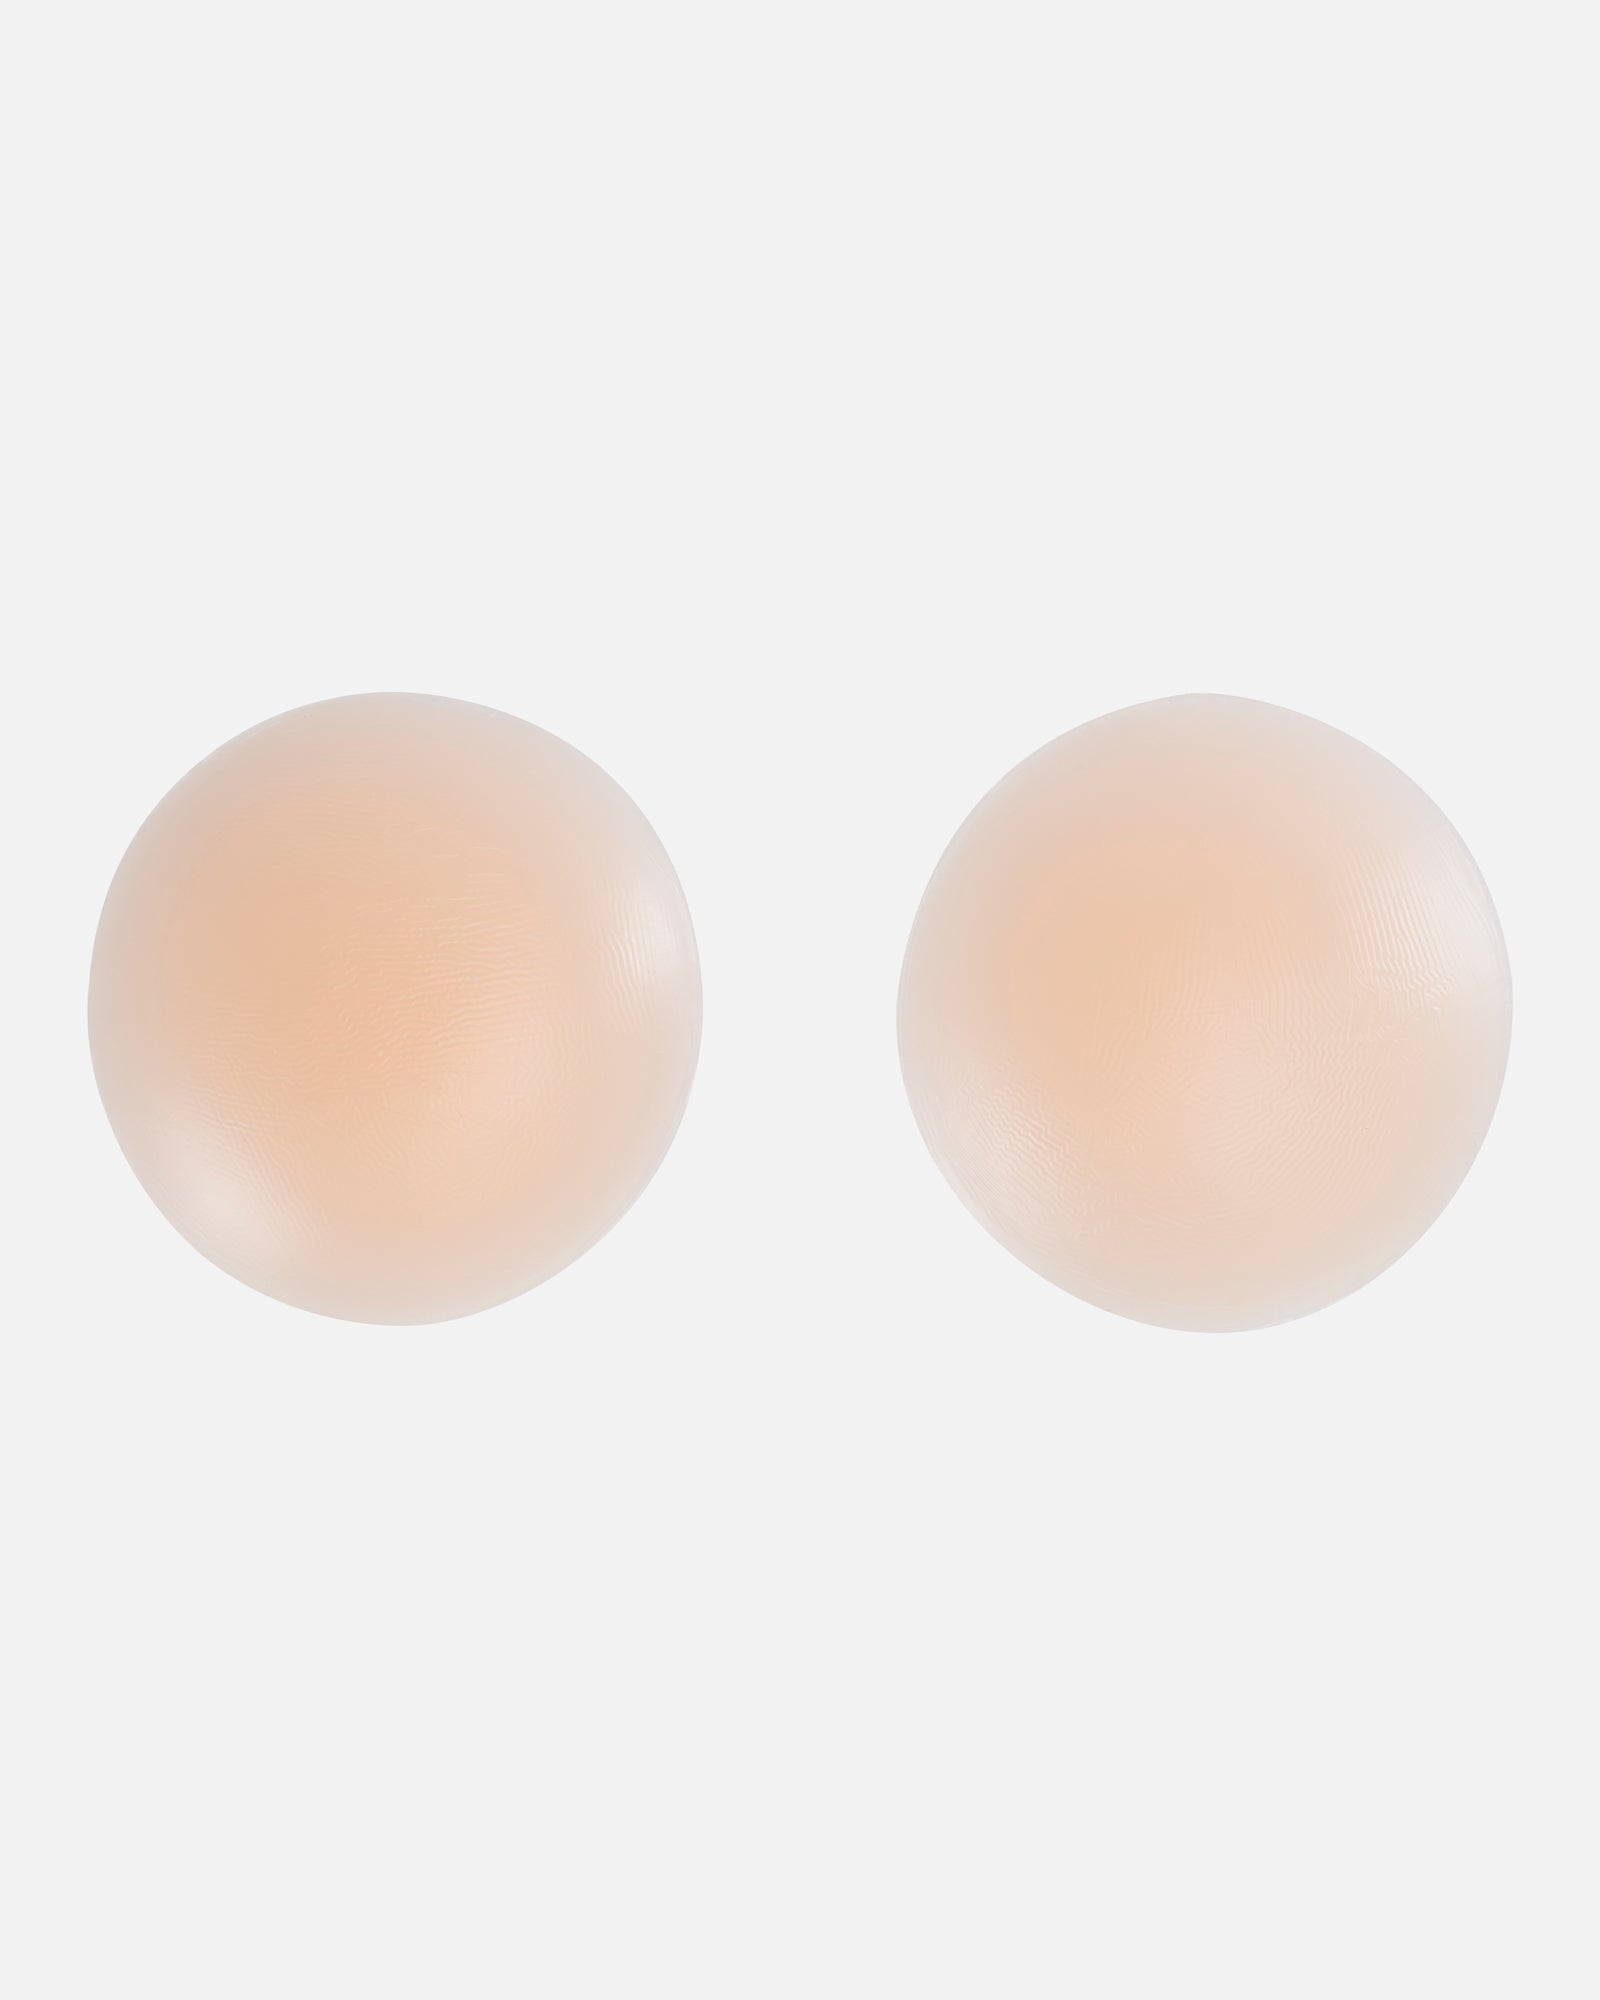 Nude Adhesive Silicone Nipple Covers